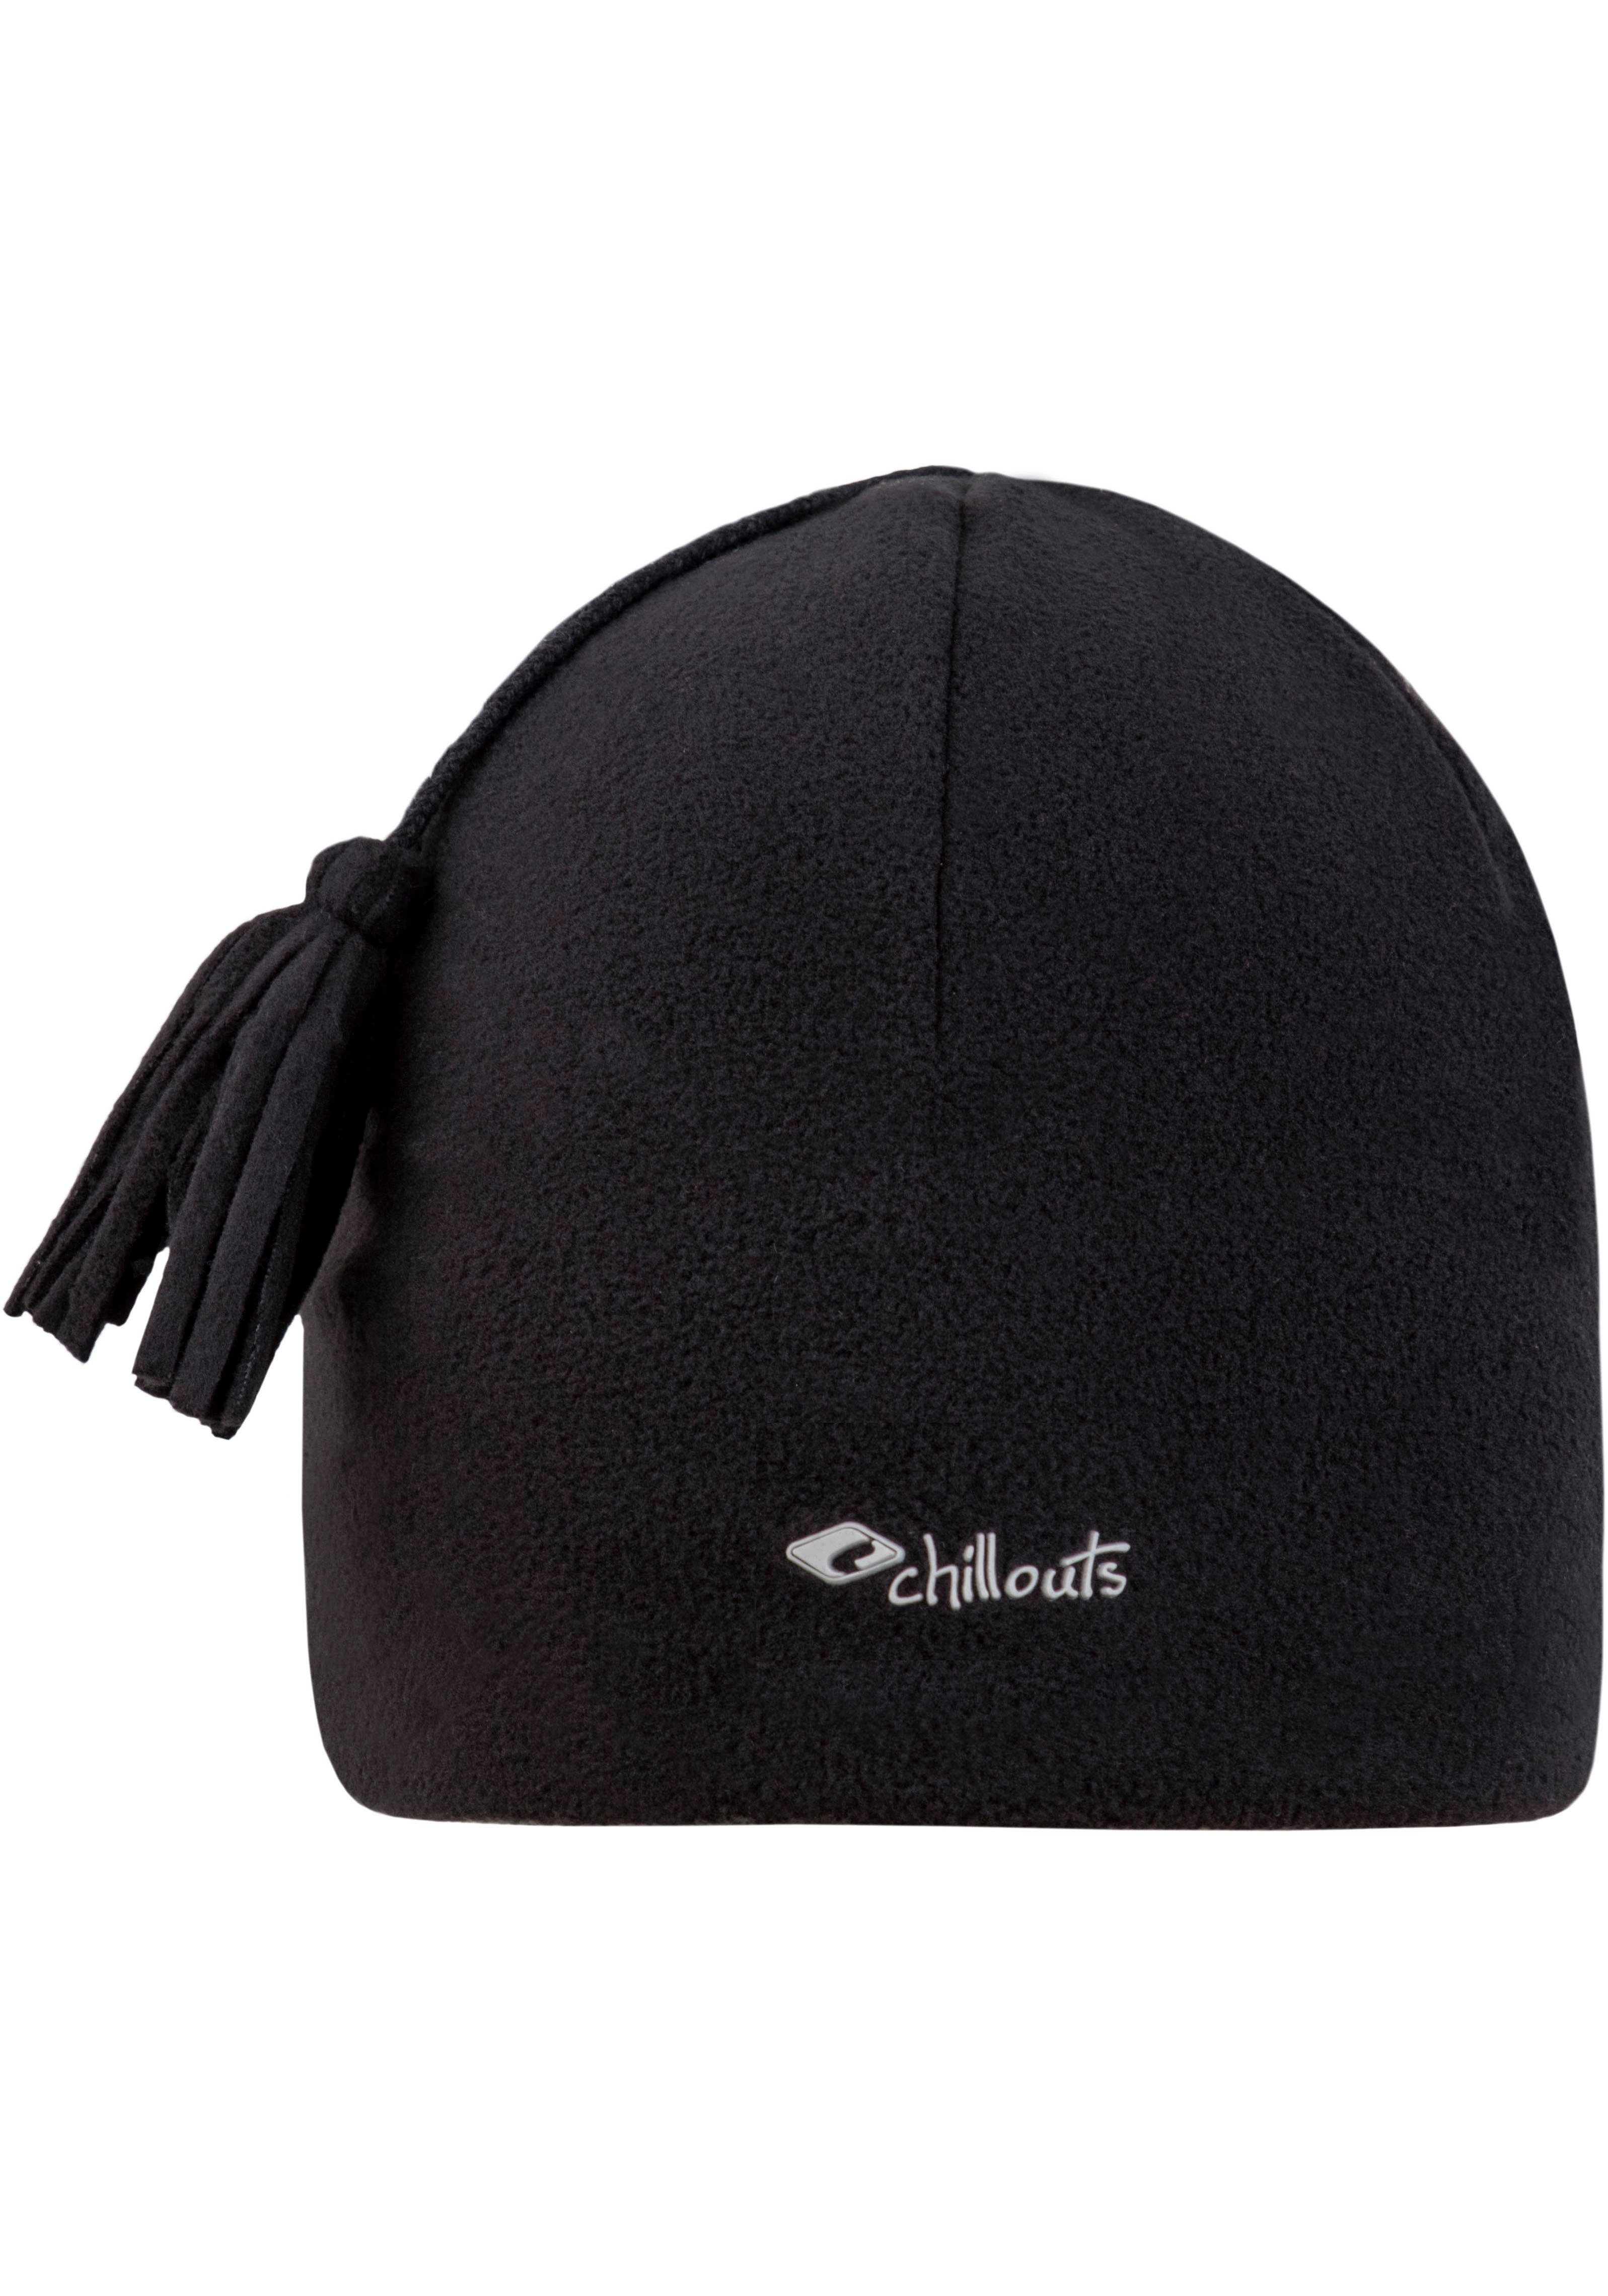 chillouts Pom Fleece Freeze black Fleecemütze Hat